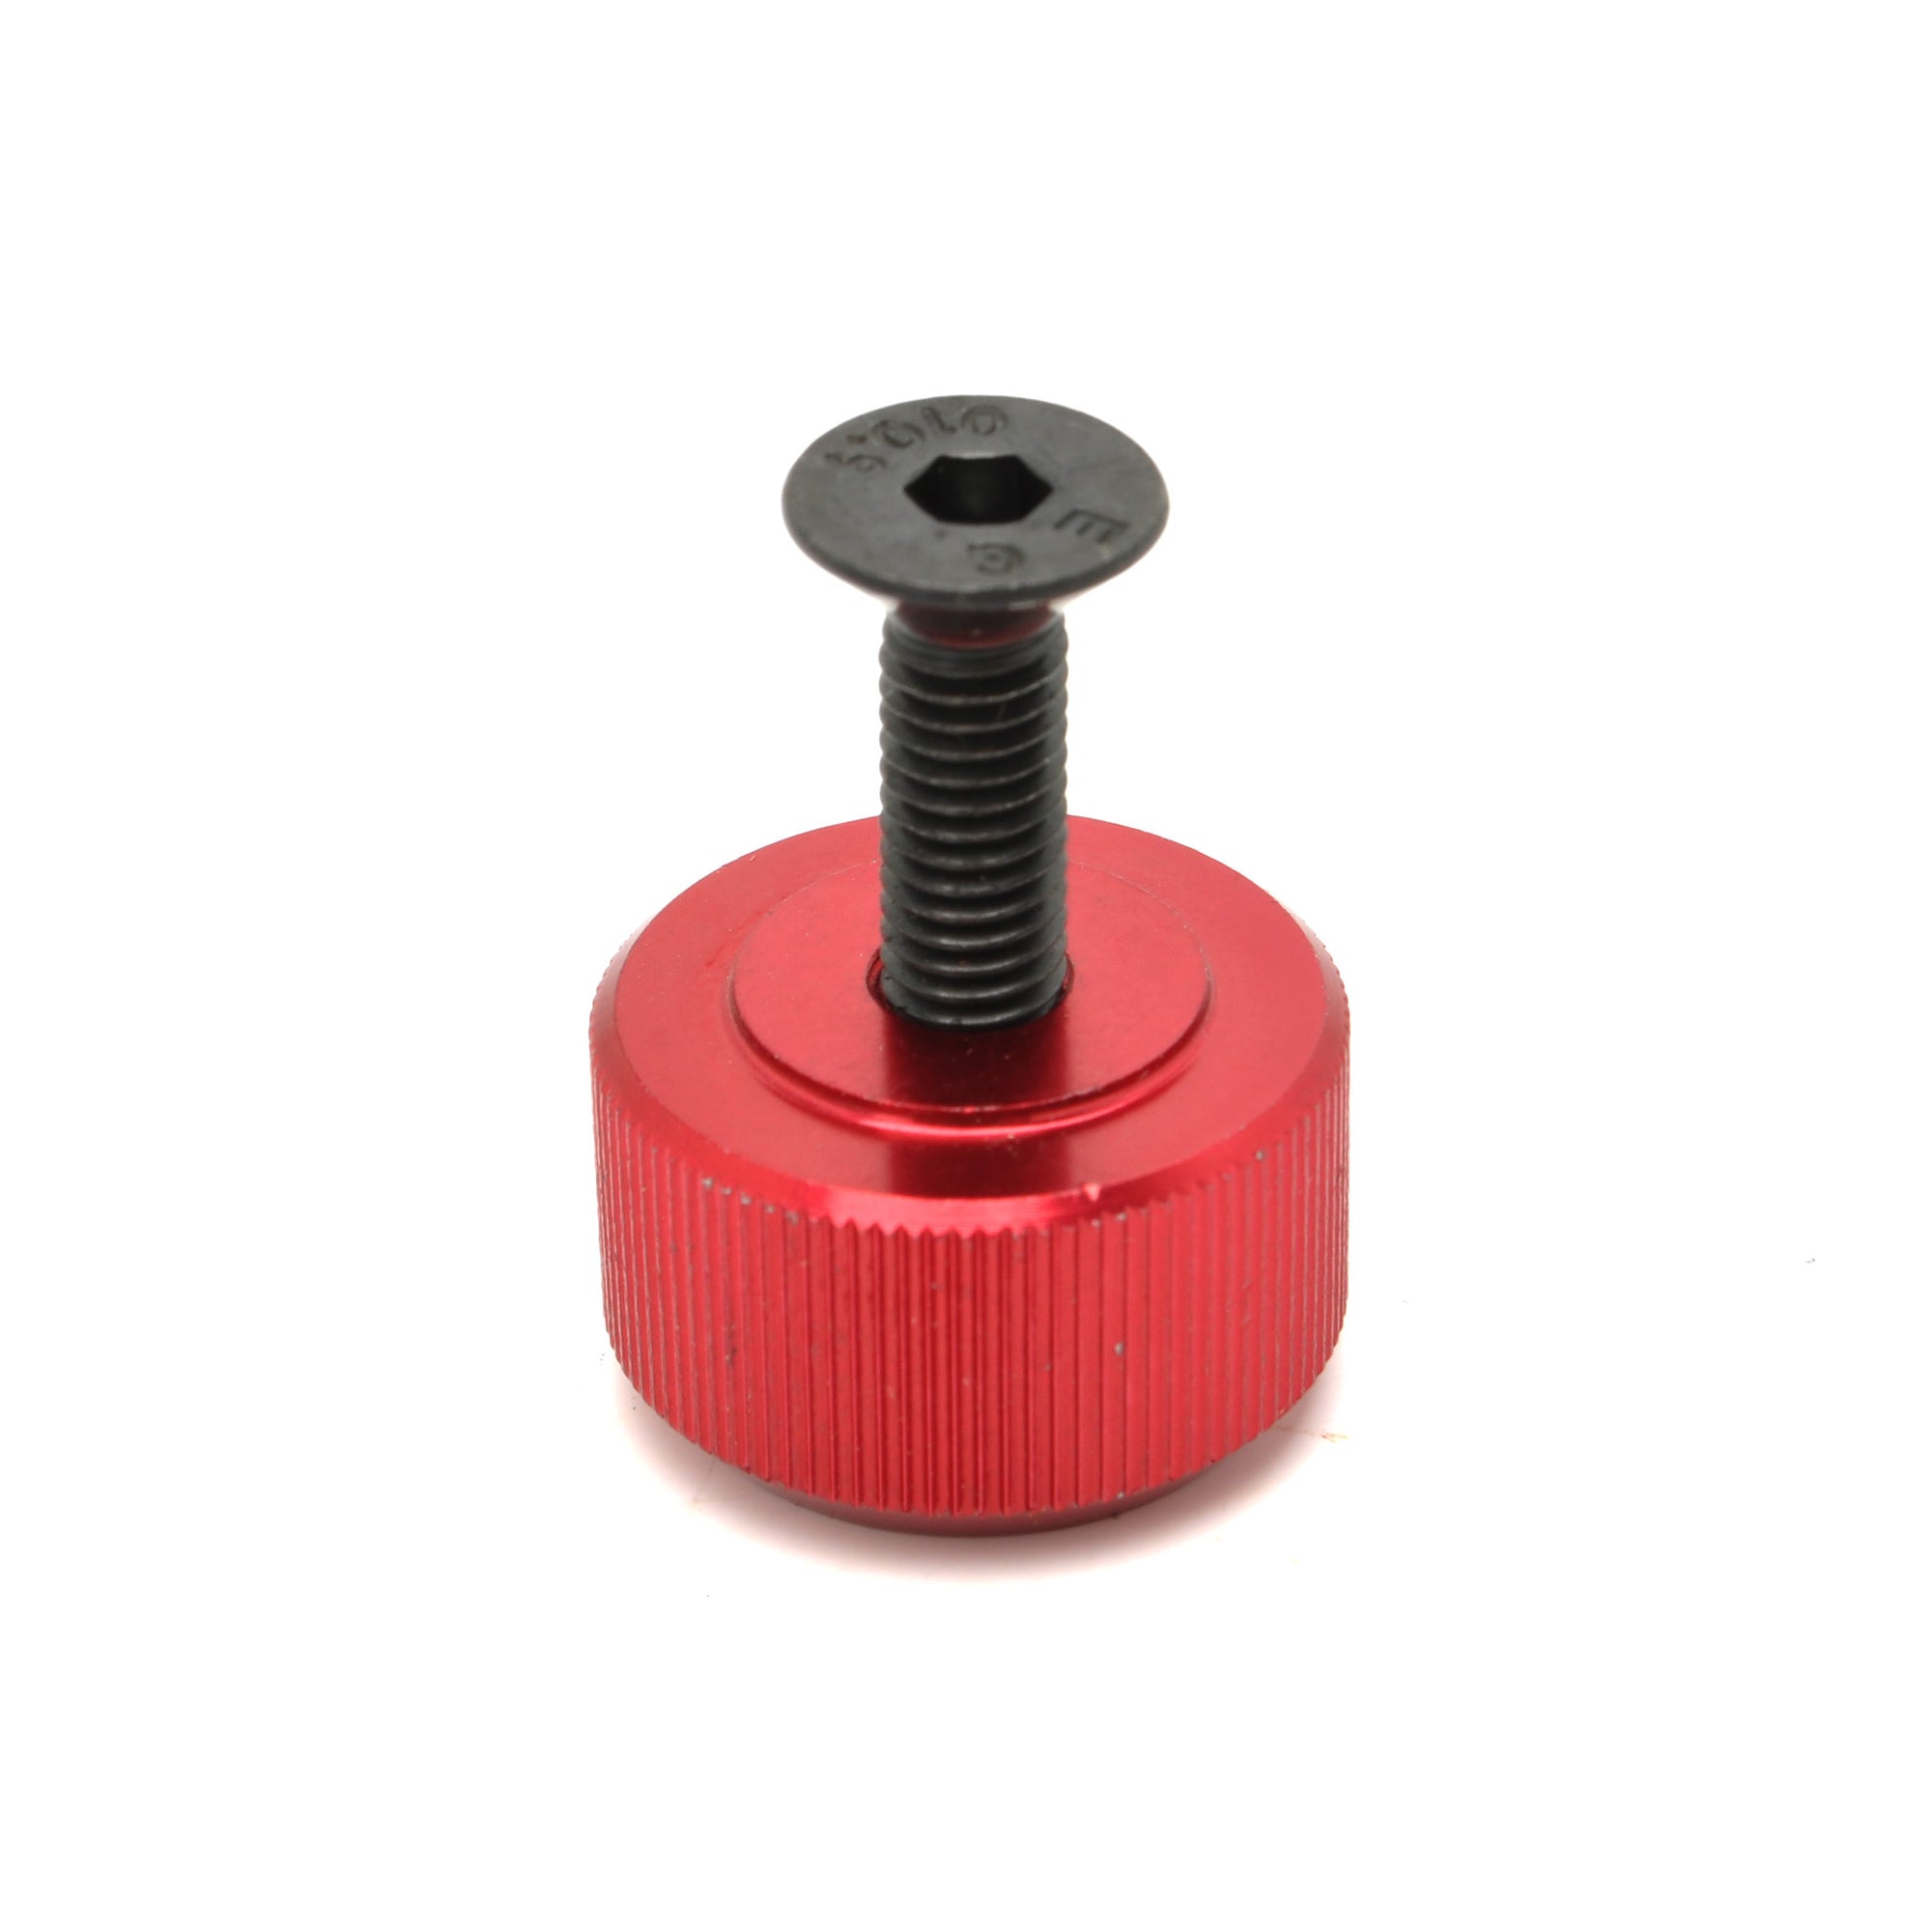 LNL PRO Parts - Red Knob - Adjustment Stop